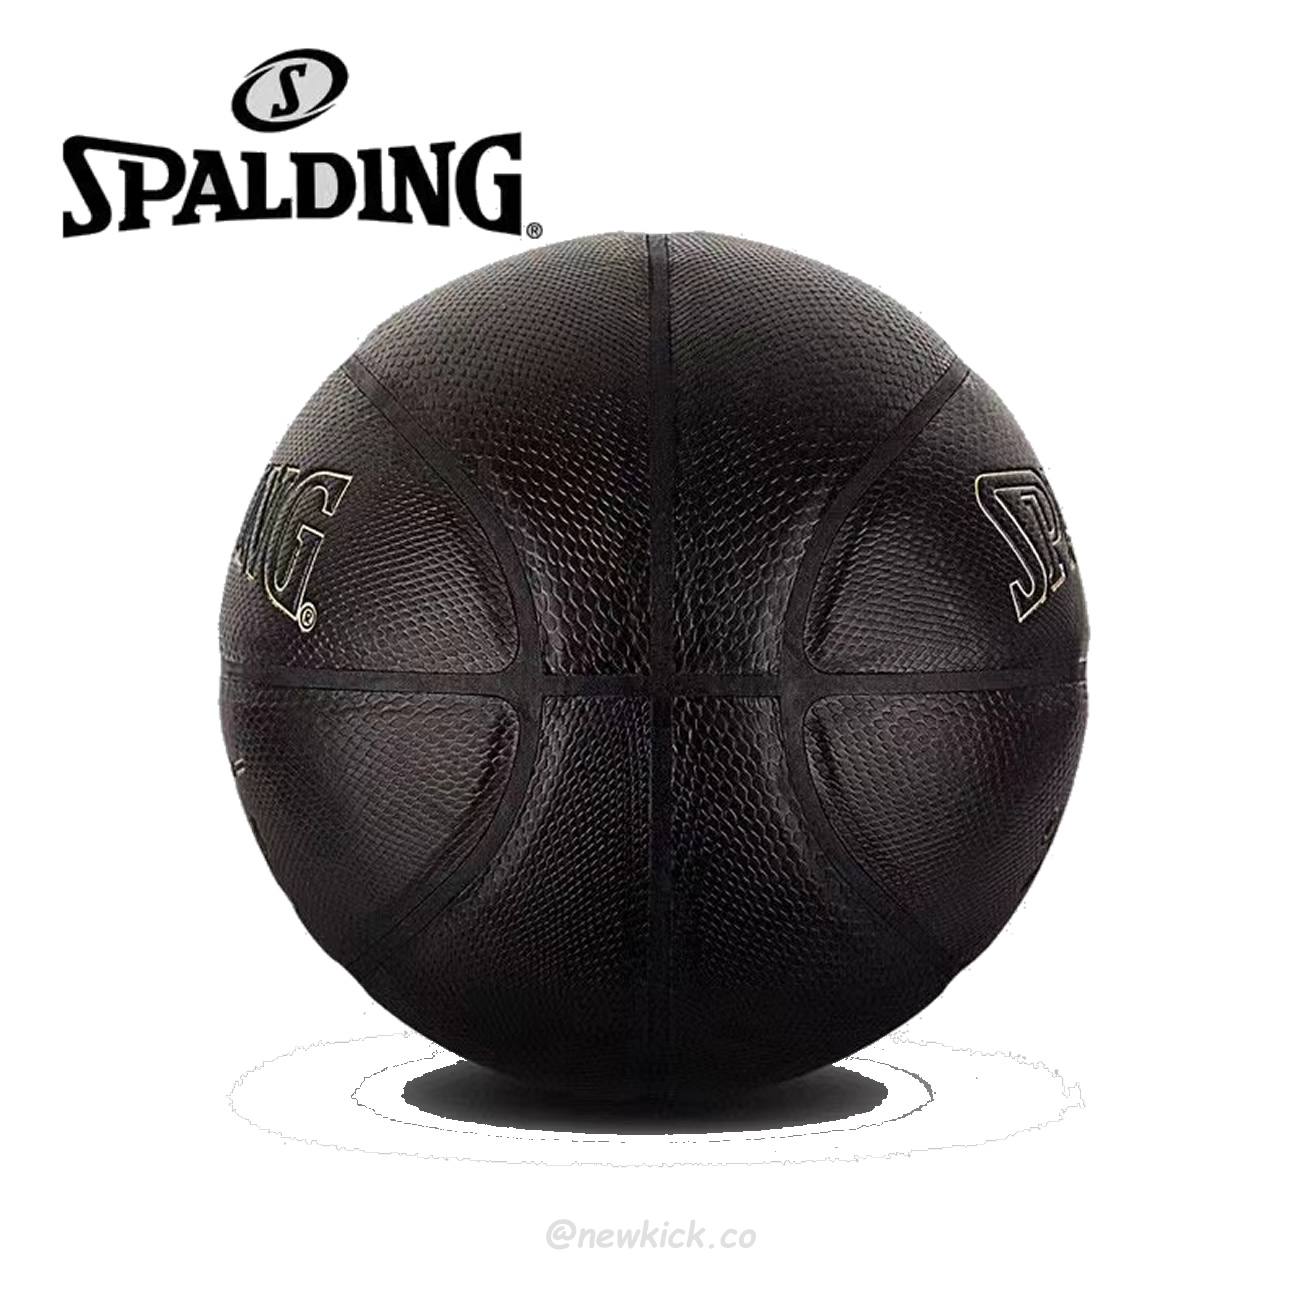 Spalding Kobe Bryant 24k Basketball Black Purple (14) - newkick.org